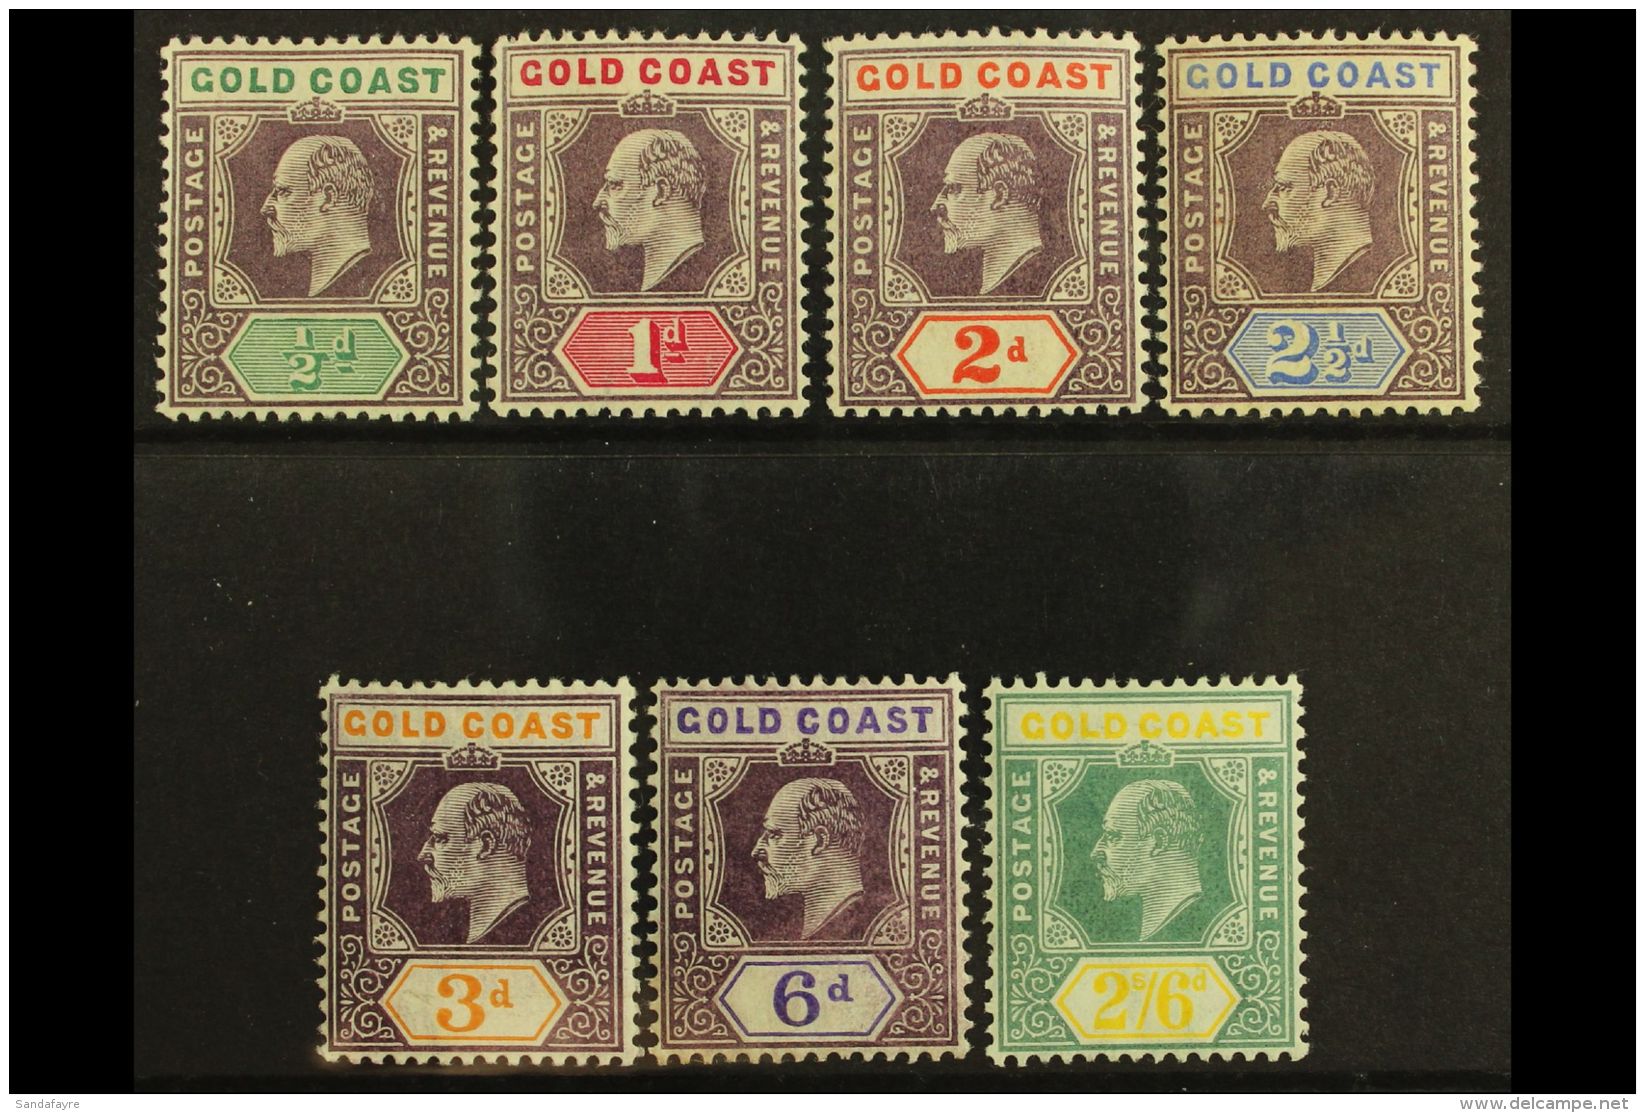 1904-06 (wmk Mult Crown CA) KEVII Set, SG 49/57, Very Fine Mint. (7 Stamps) For More Images, Please Visit... - Côte D'Or (...-1957)